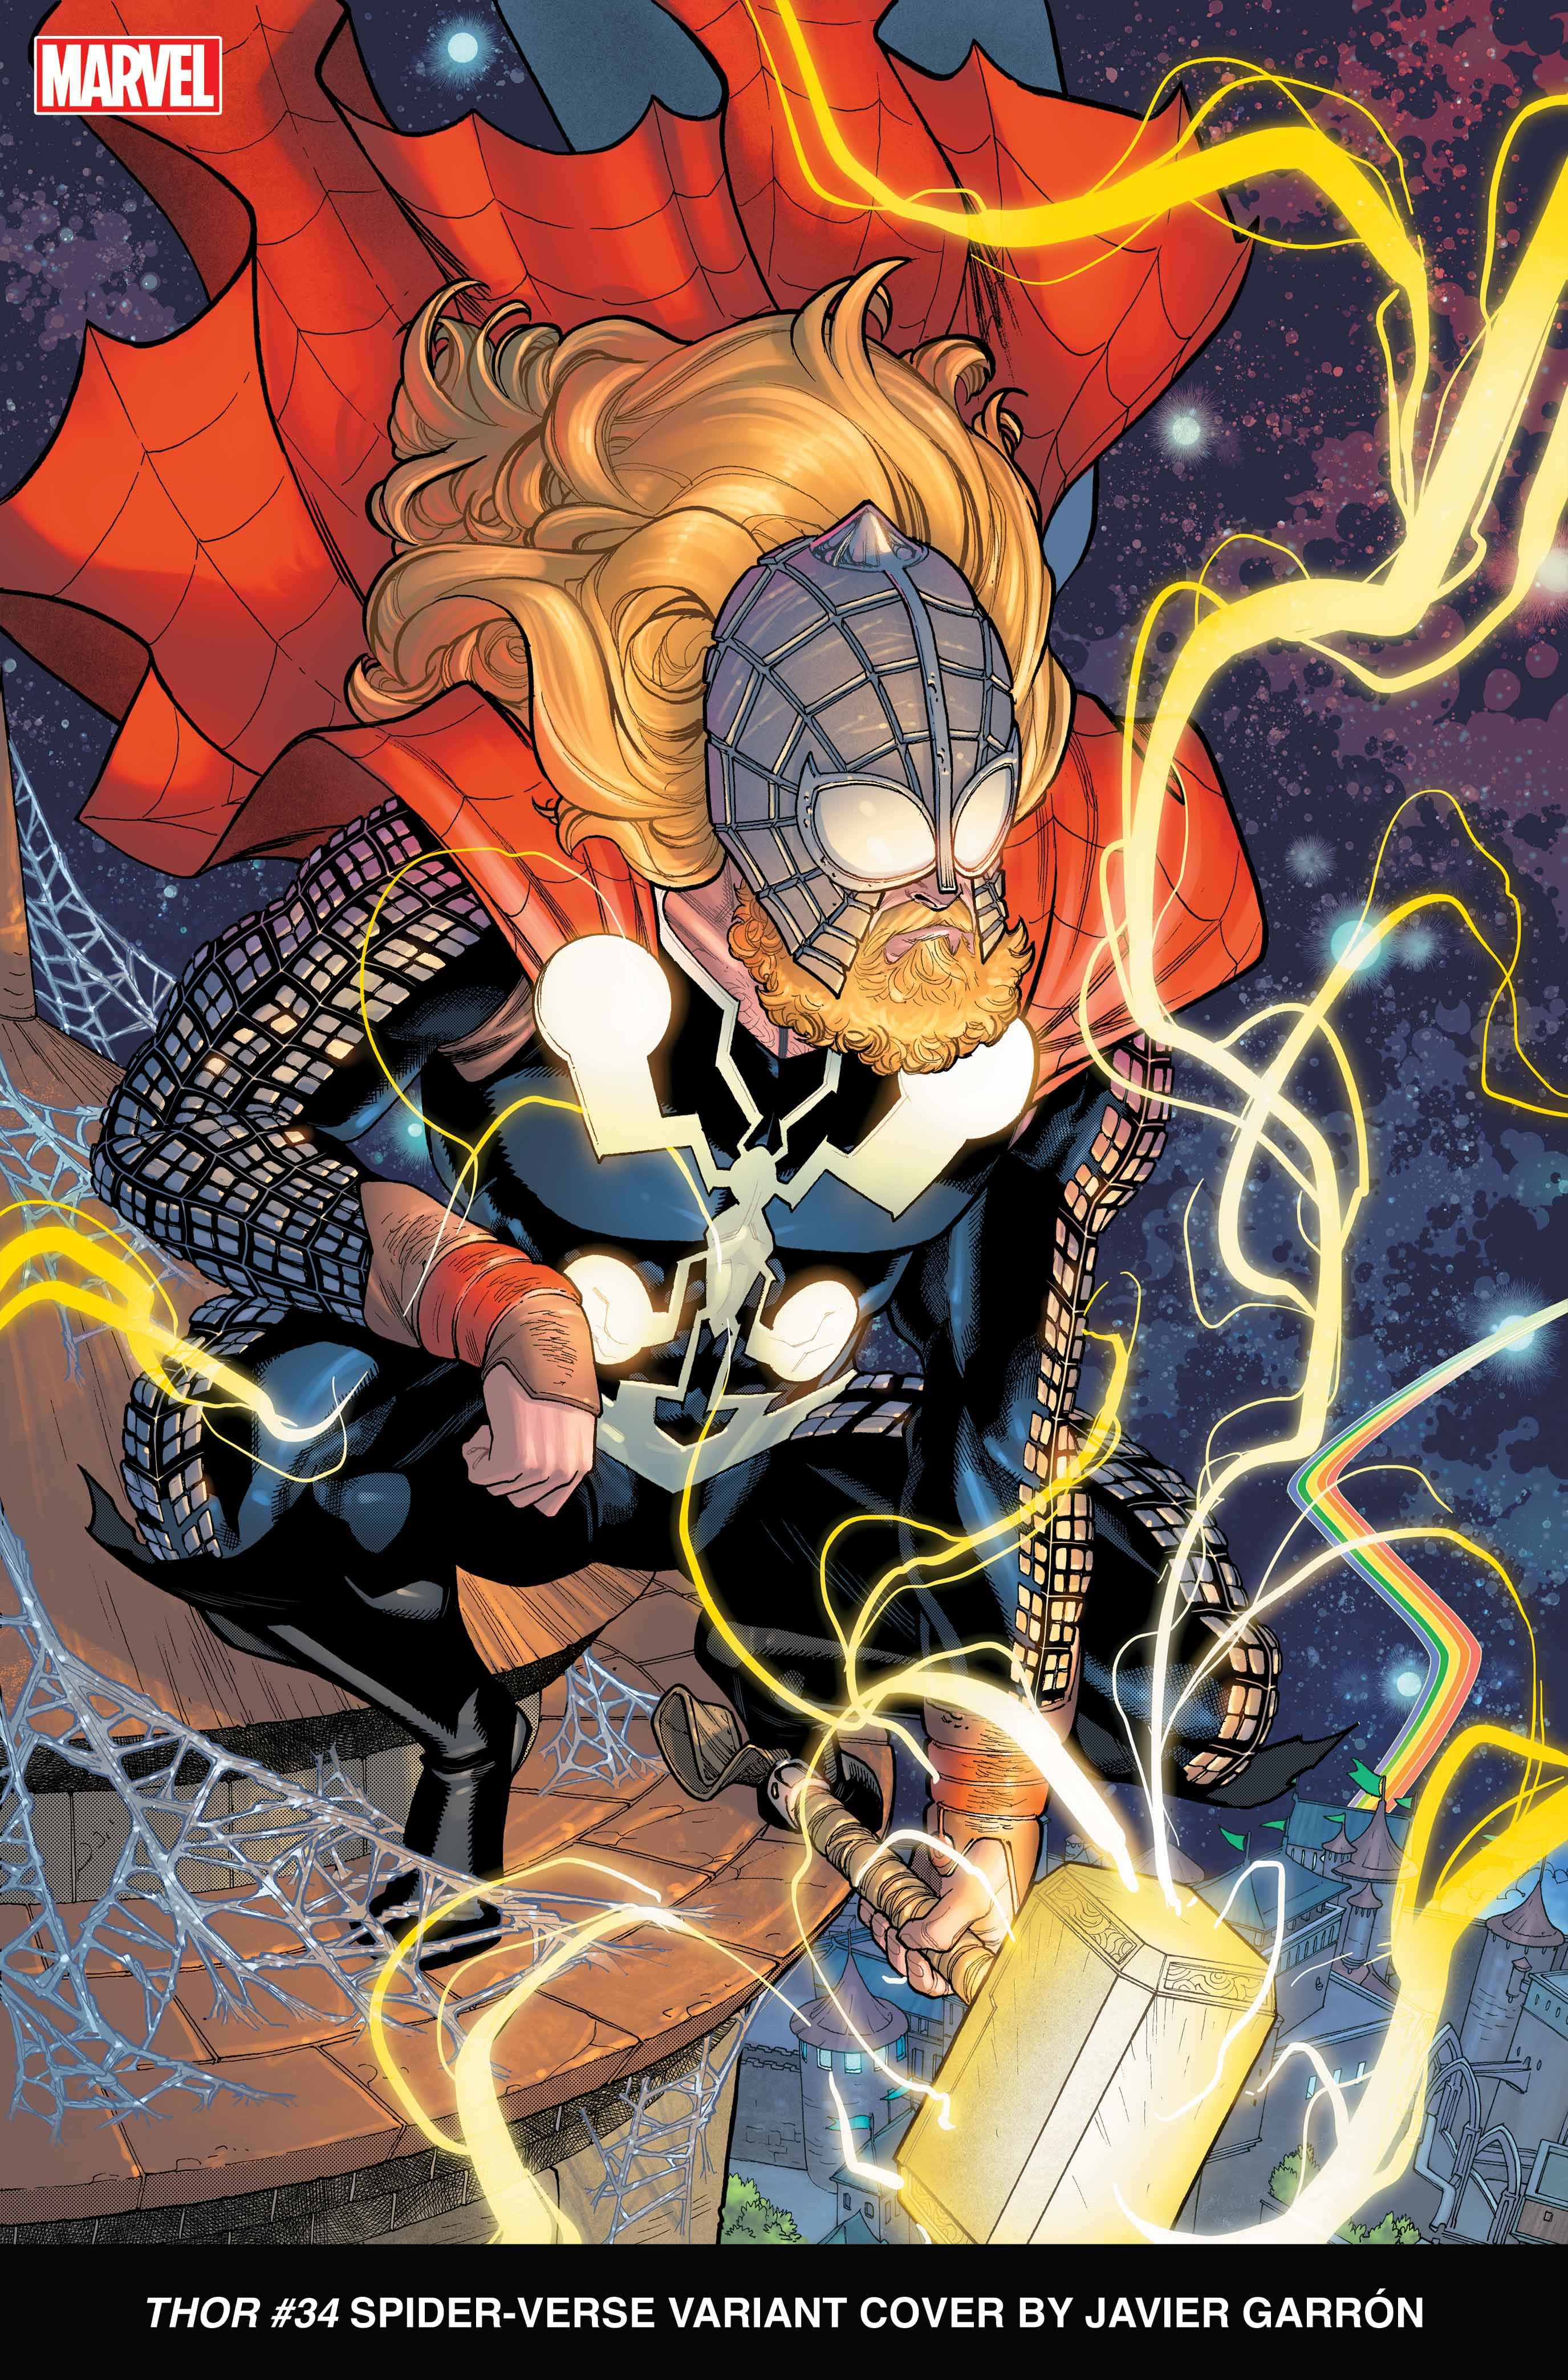 THOR #34 Spider-Verse Variant Cover by Javier Garrón